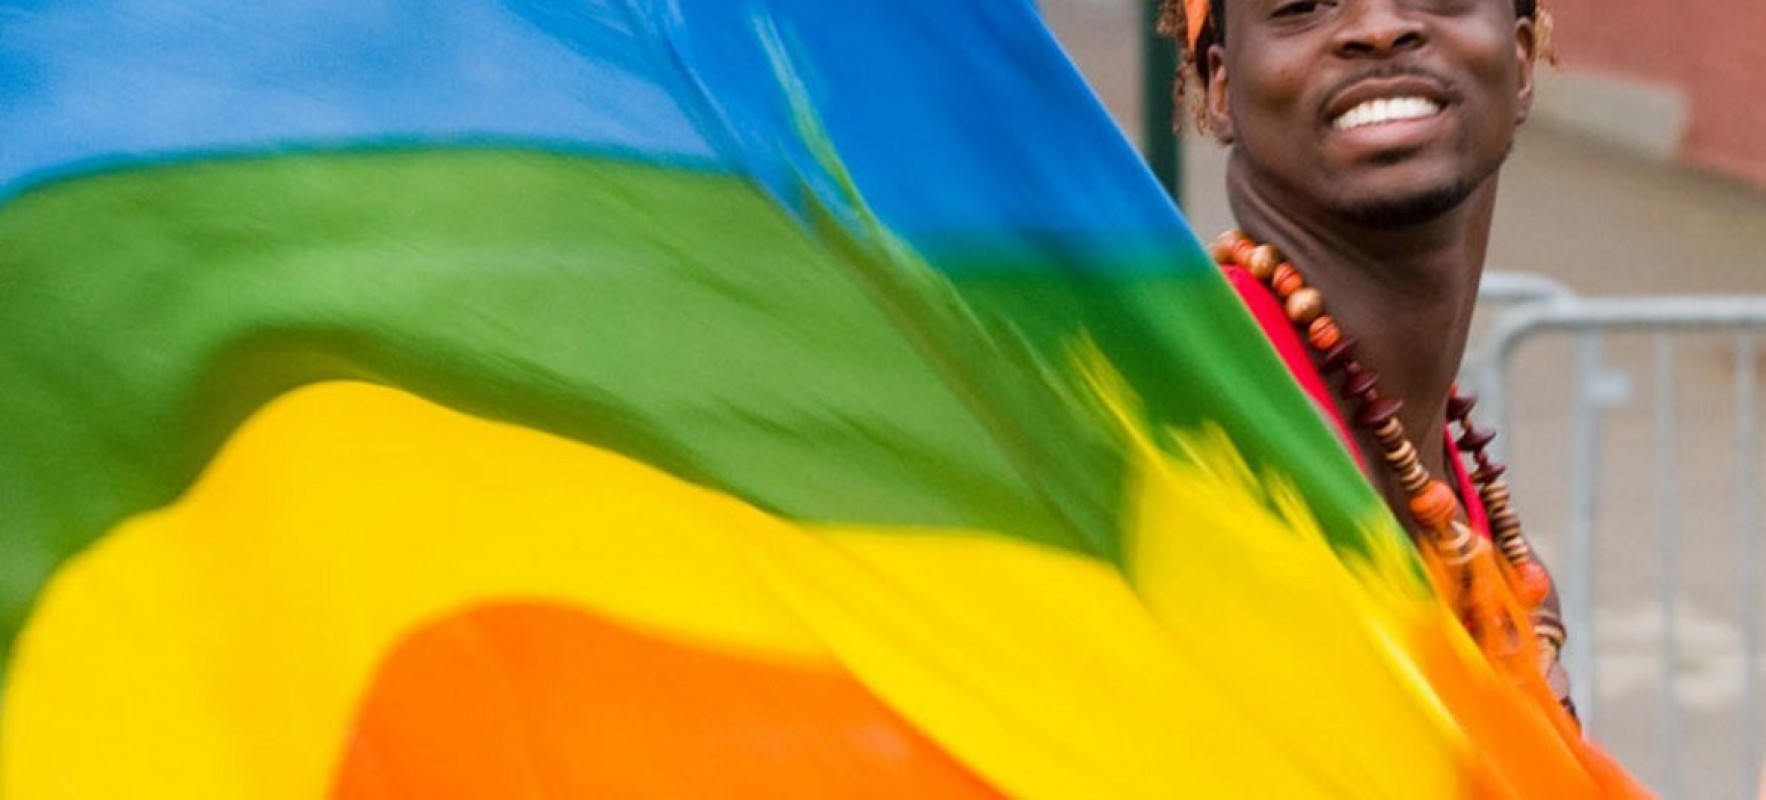 Cameroun : Refus de la visite de l'ambassadeur français de la cause LGBTQ+